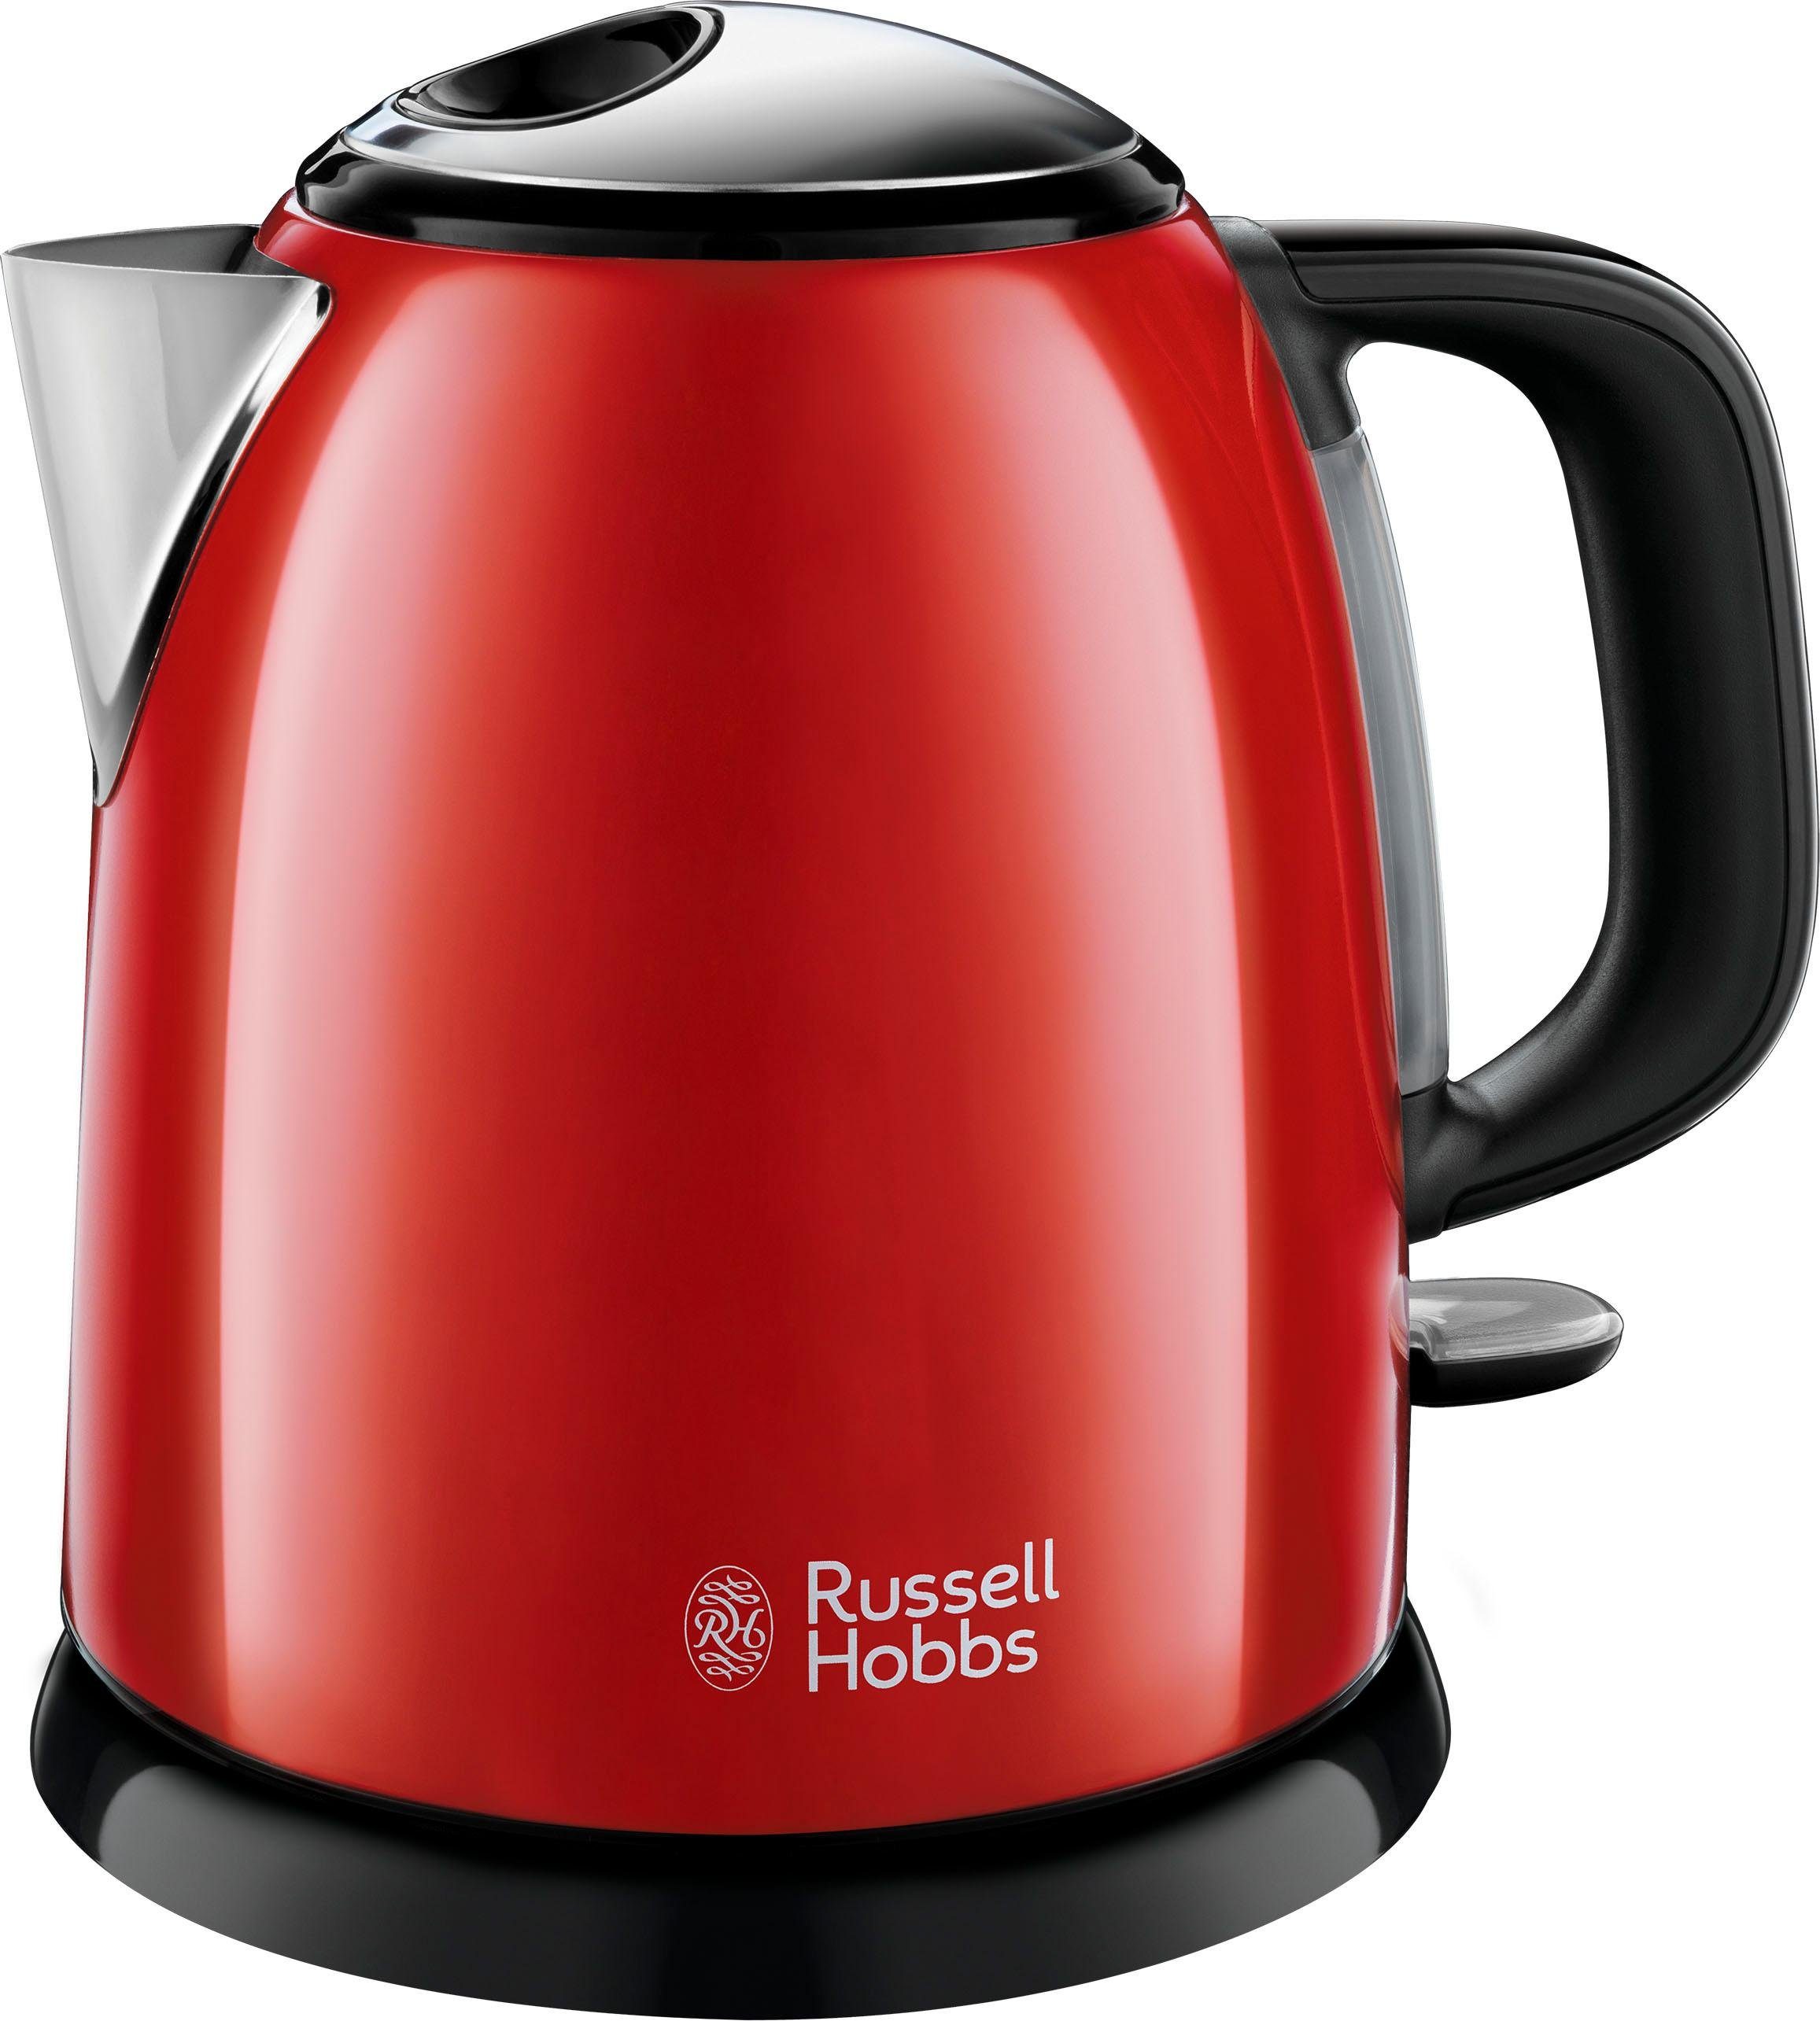 RUSSELL HOBBS Wasserkocher Colours Plus rot 24992-70, 1 l, 2400 W Red